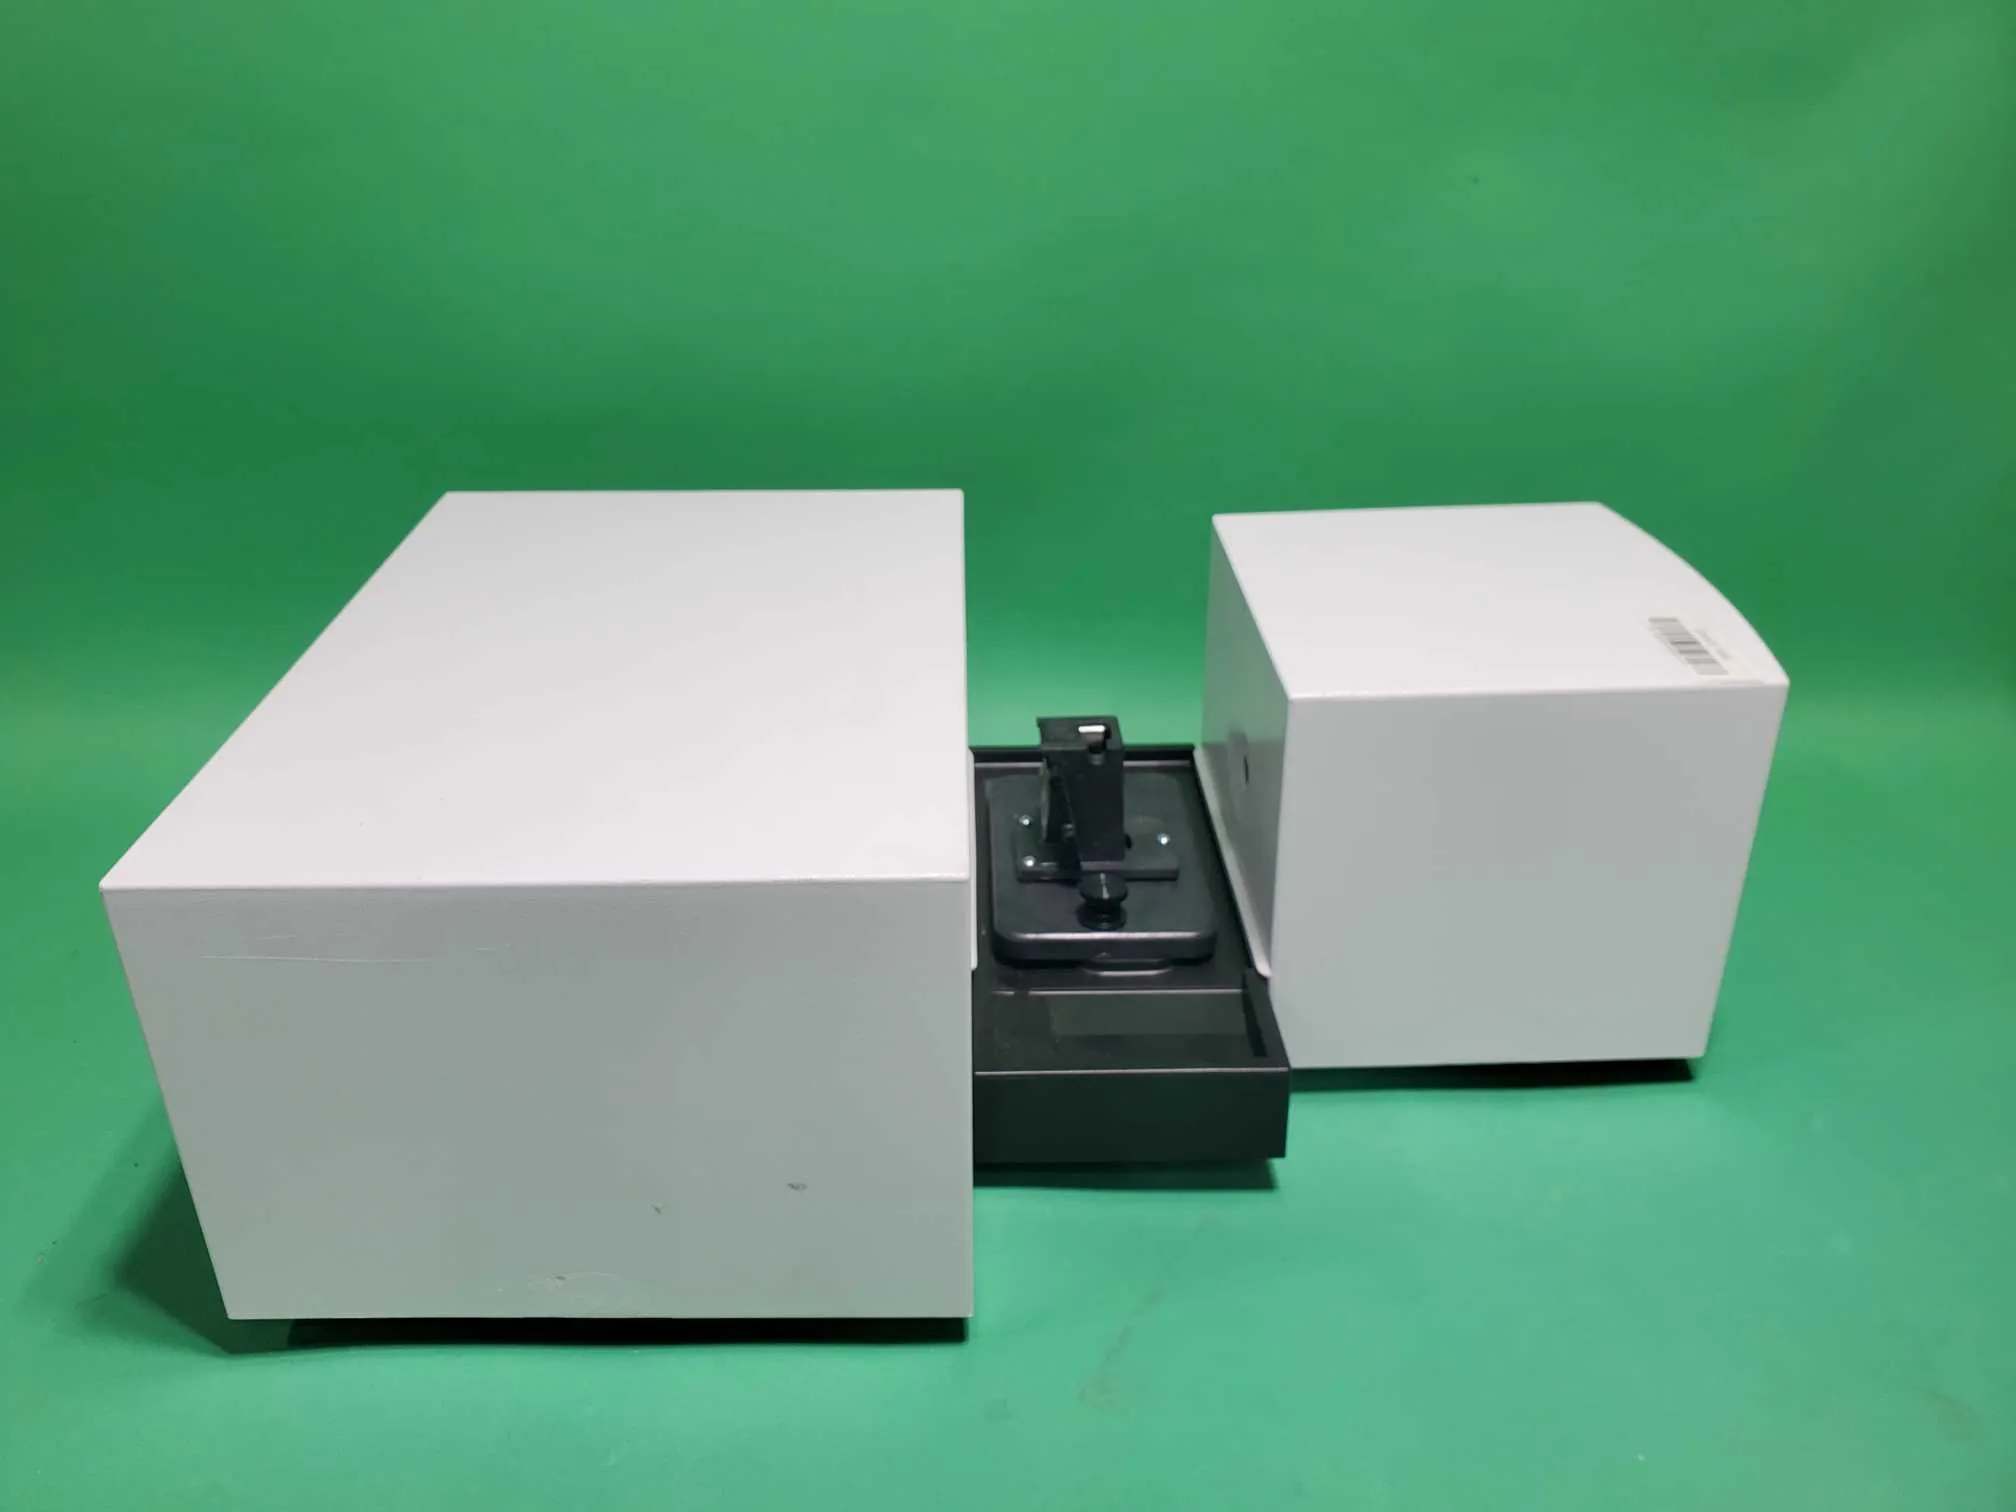 Agilent Technologies Cary 8454 UV-Vis Spectrophotometer